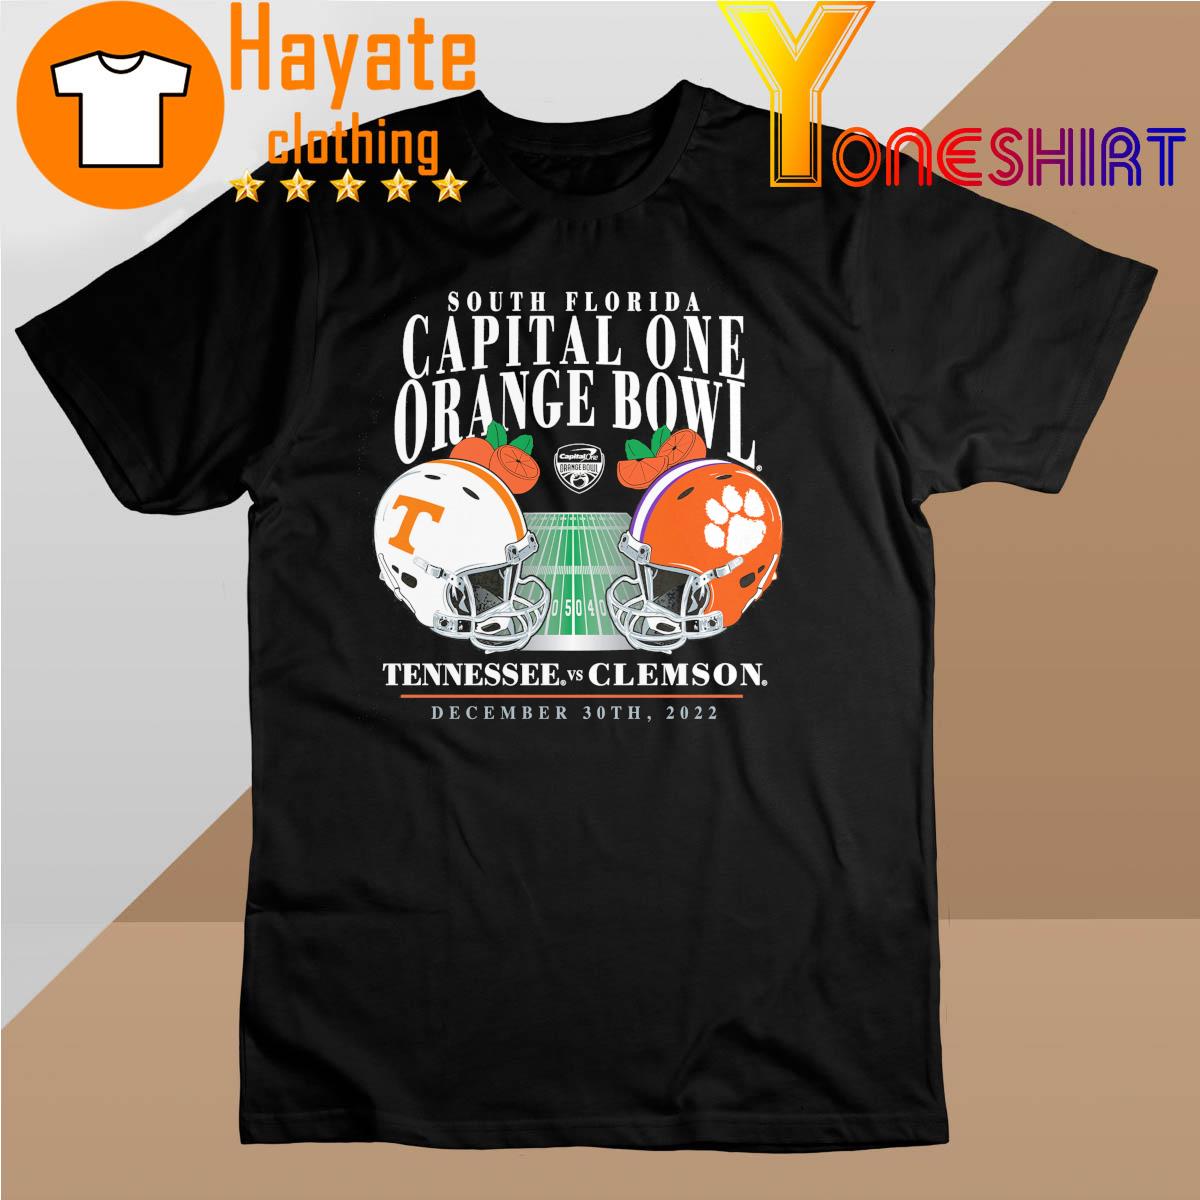 South Florida Capital One Orange Bowl Tennessee vs Clemson 2022 shirt